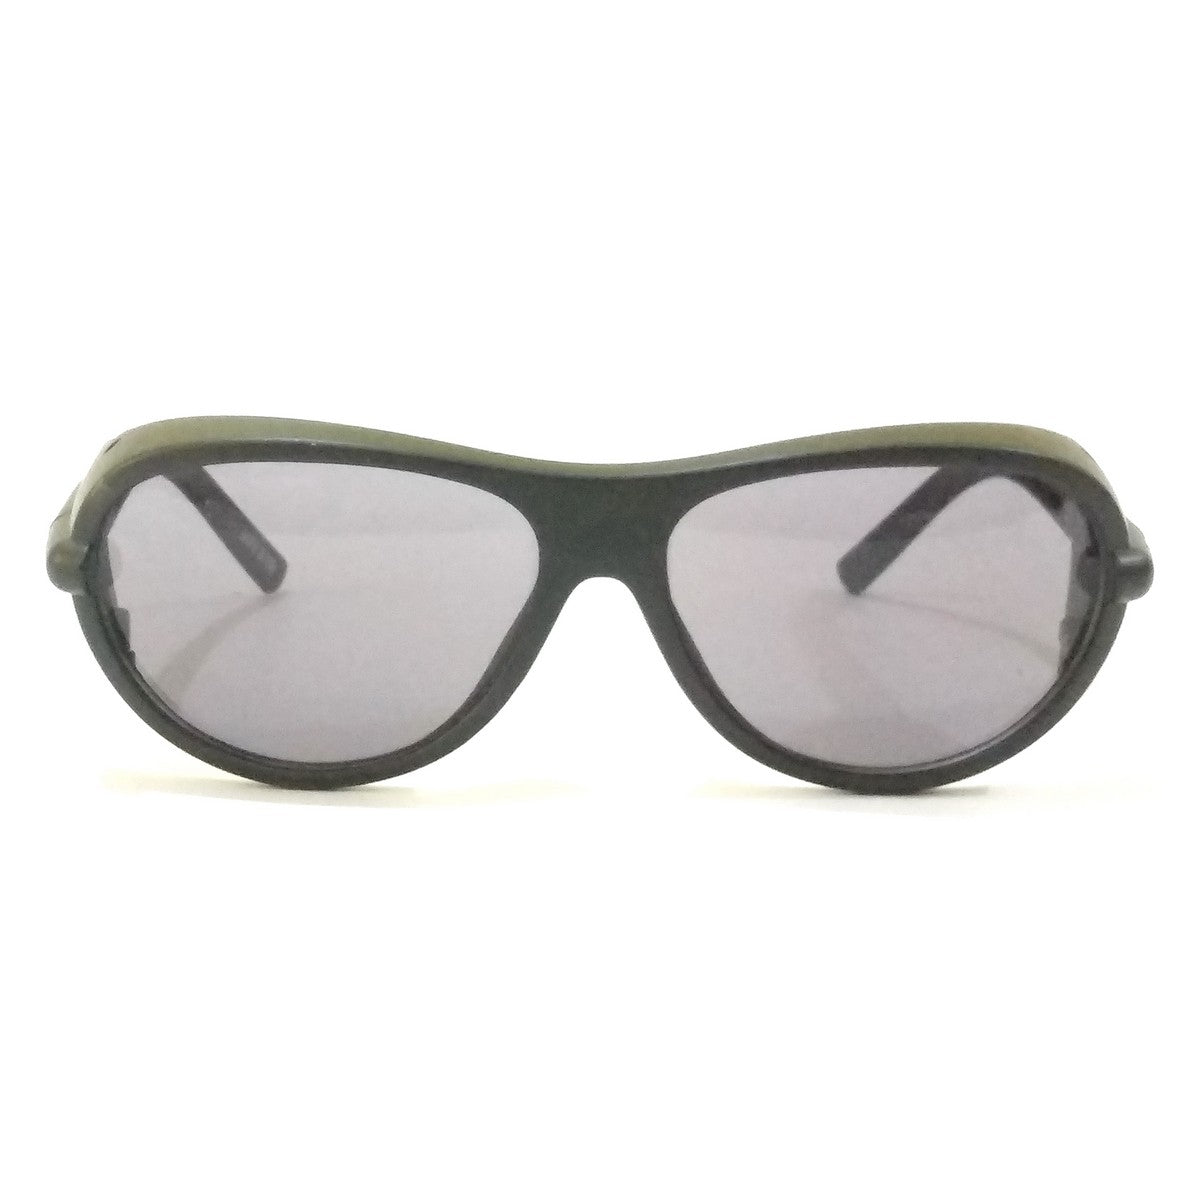 Dark Black Eye Safety Glasses Cataract Goggles M110-22 - Glasses India Online